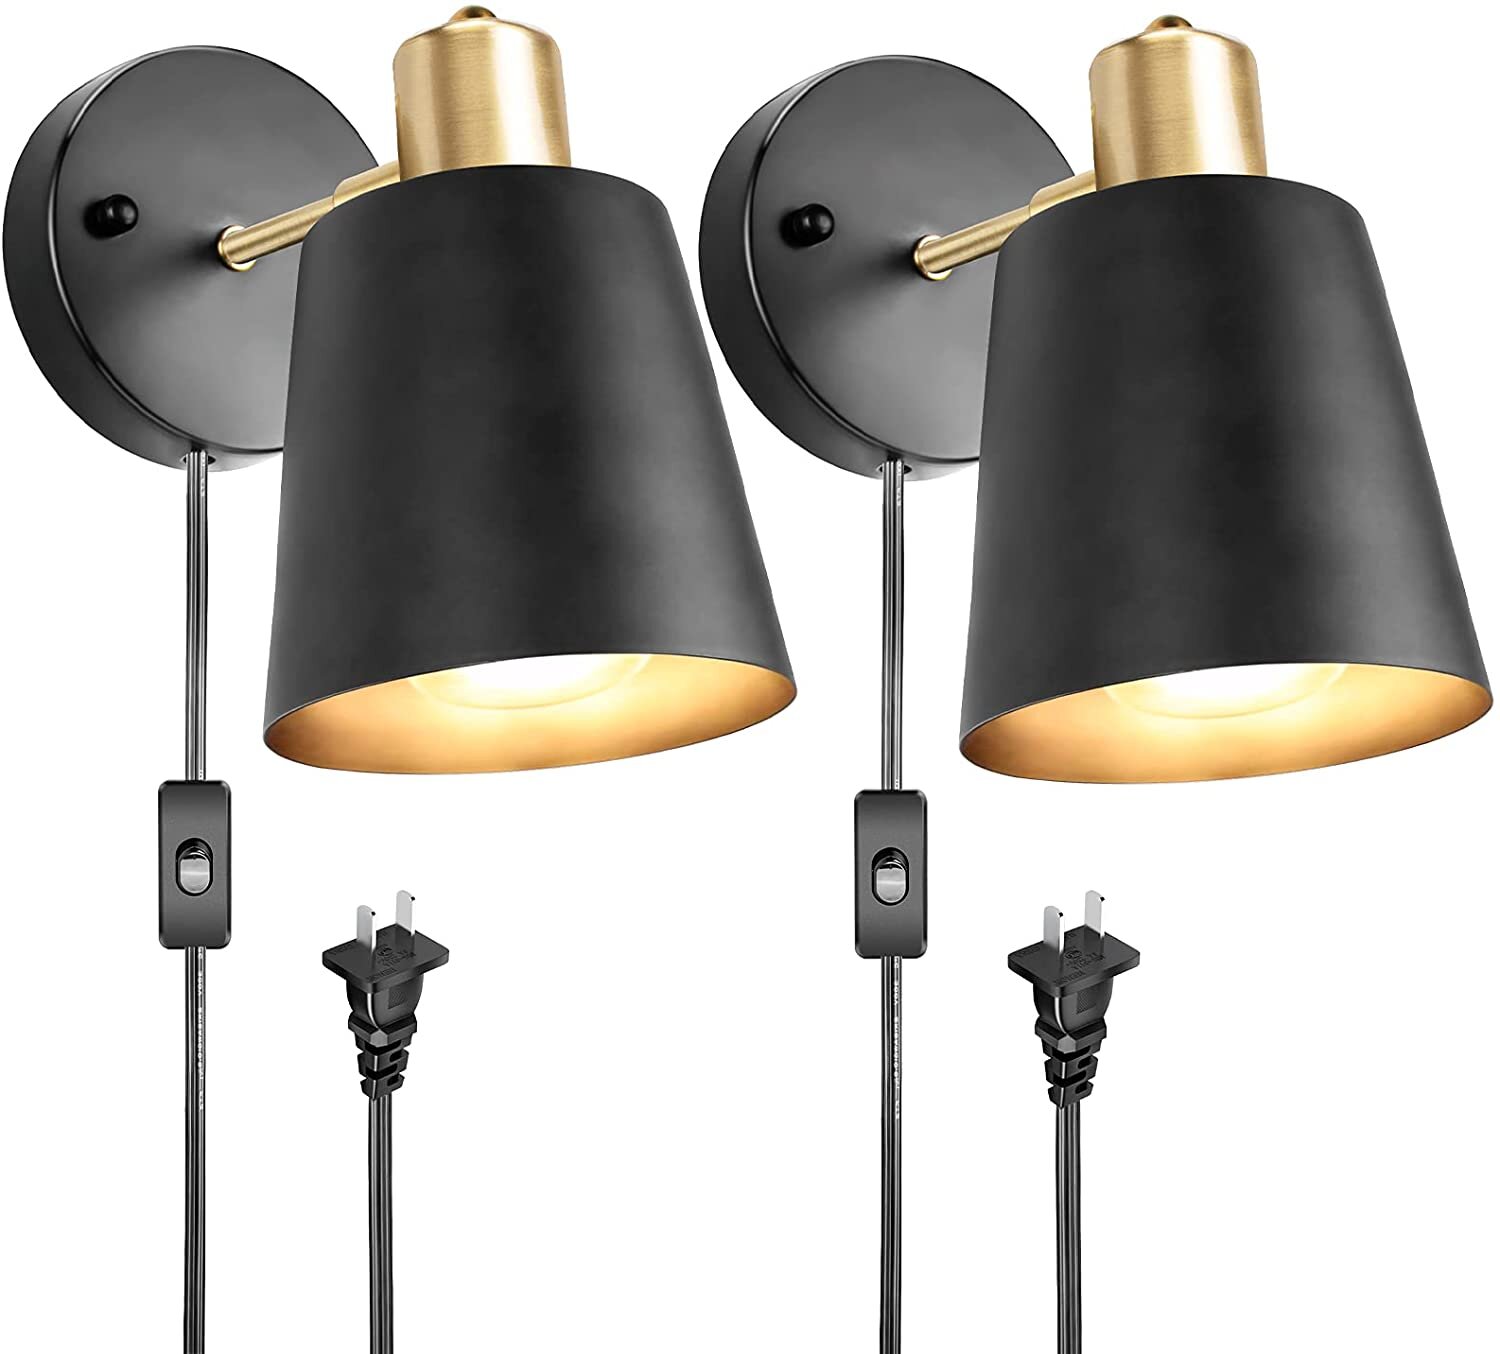 LED Wall Mounted Sconce Lamp Lighting Fixture Light Fabric E27 Bulb Bedside Read 